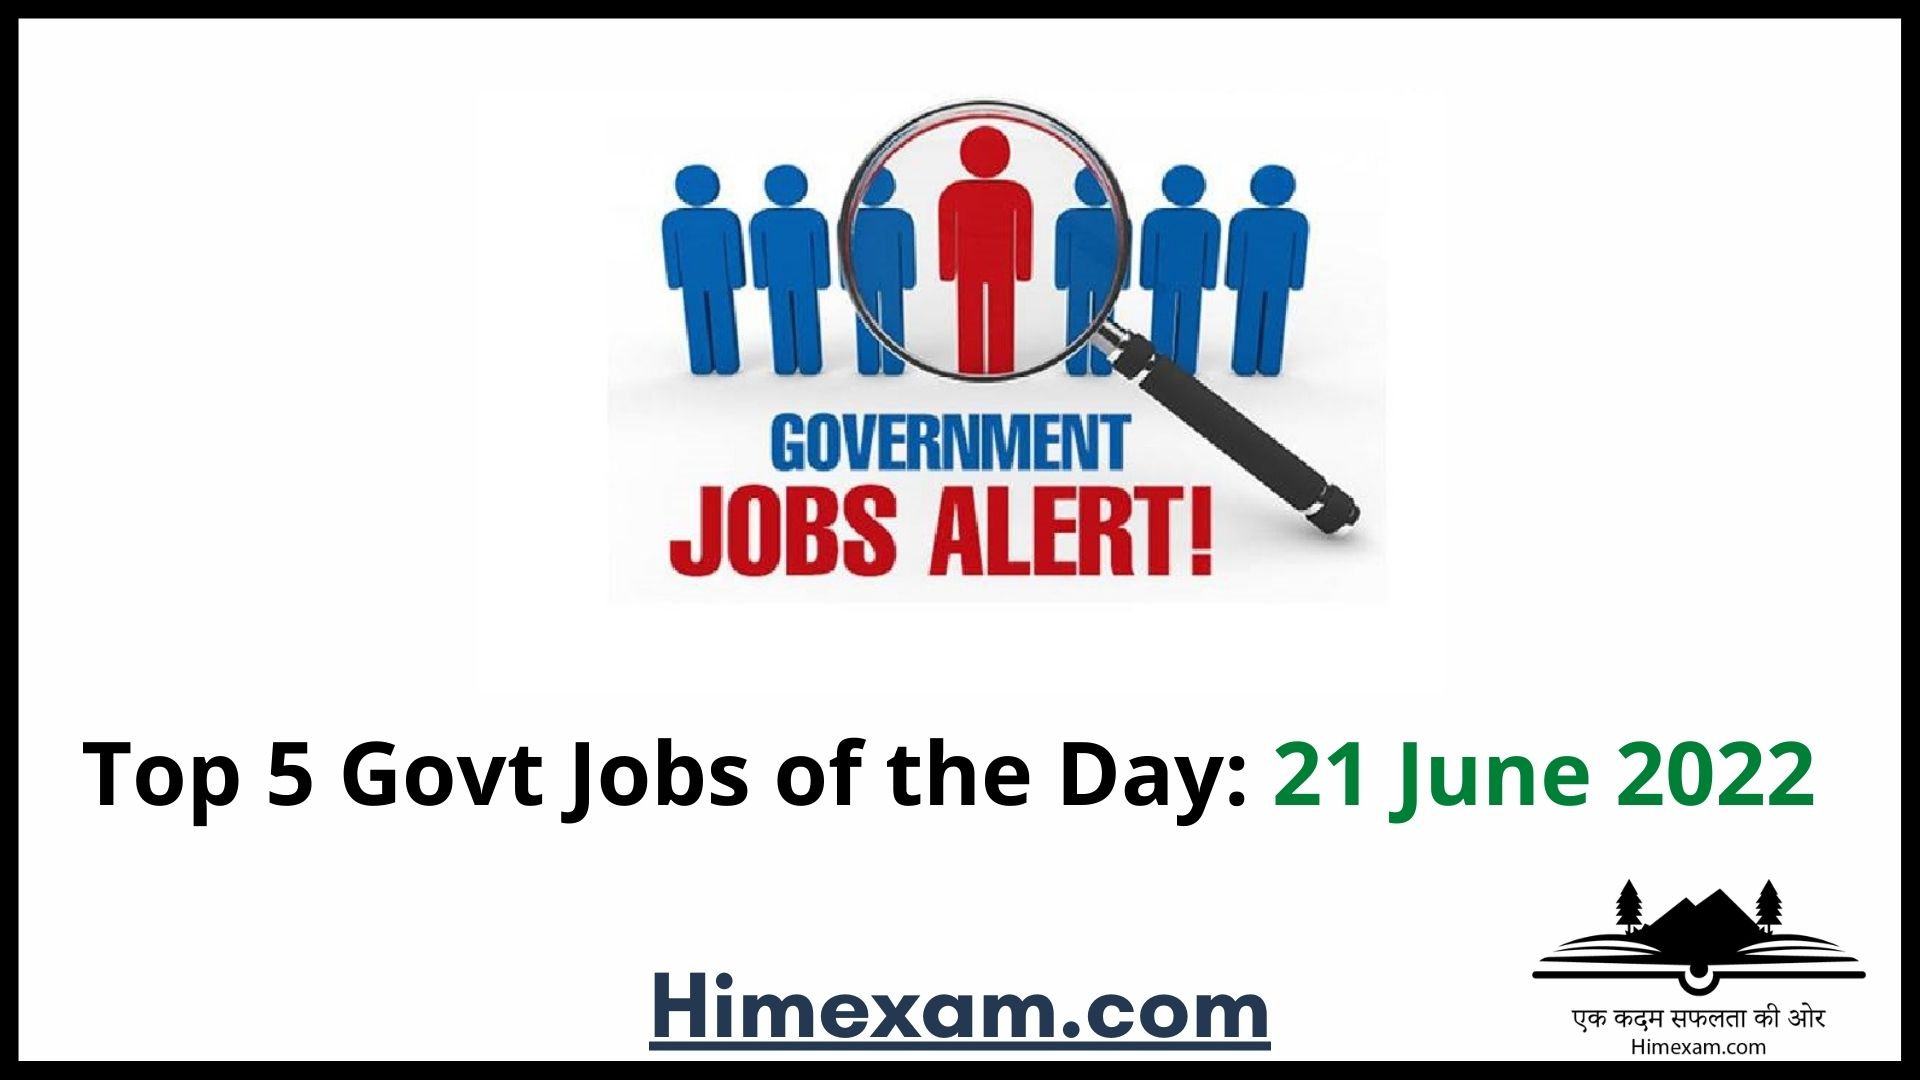 Top 5 Govt Jobs of the Day: 21 June 2022